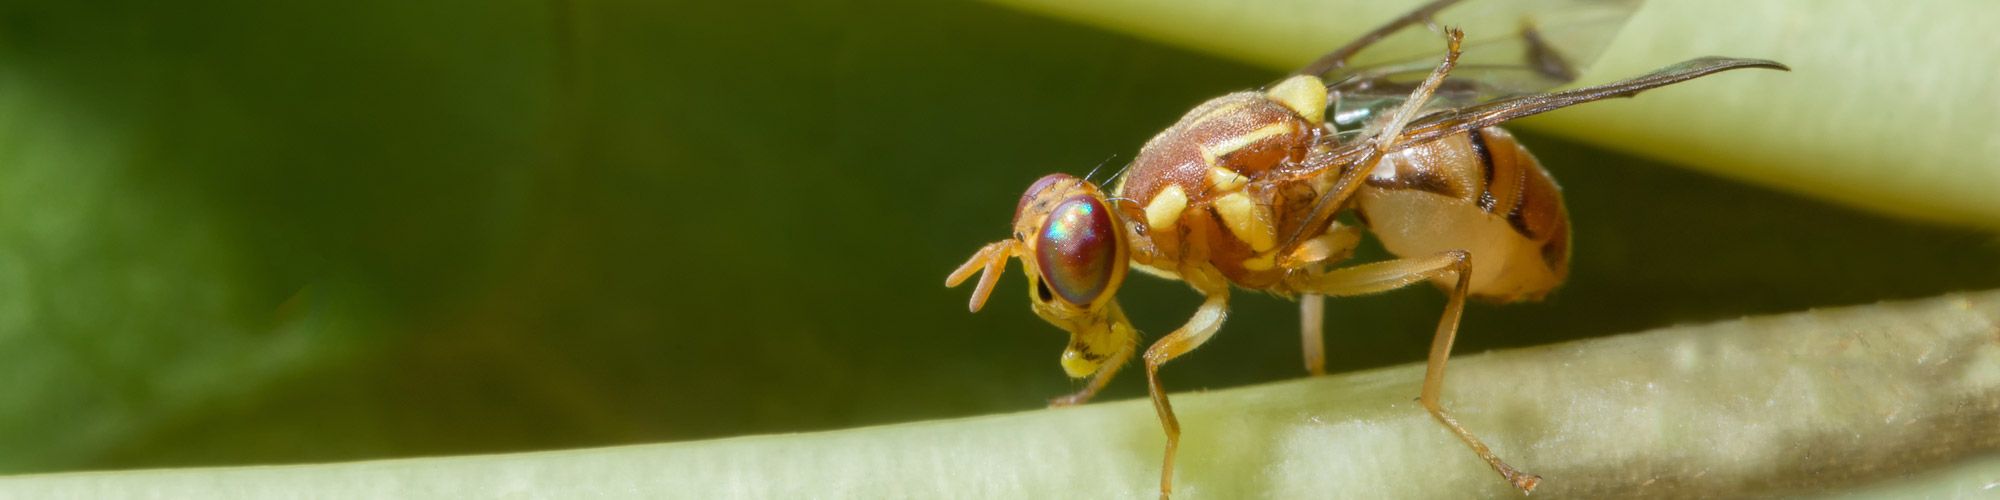 Drosophila - Rudi Ulmer Schädlingsbekämpfung